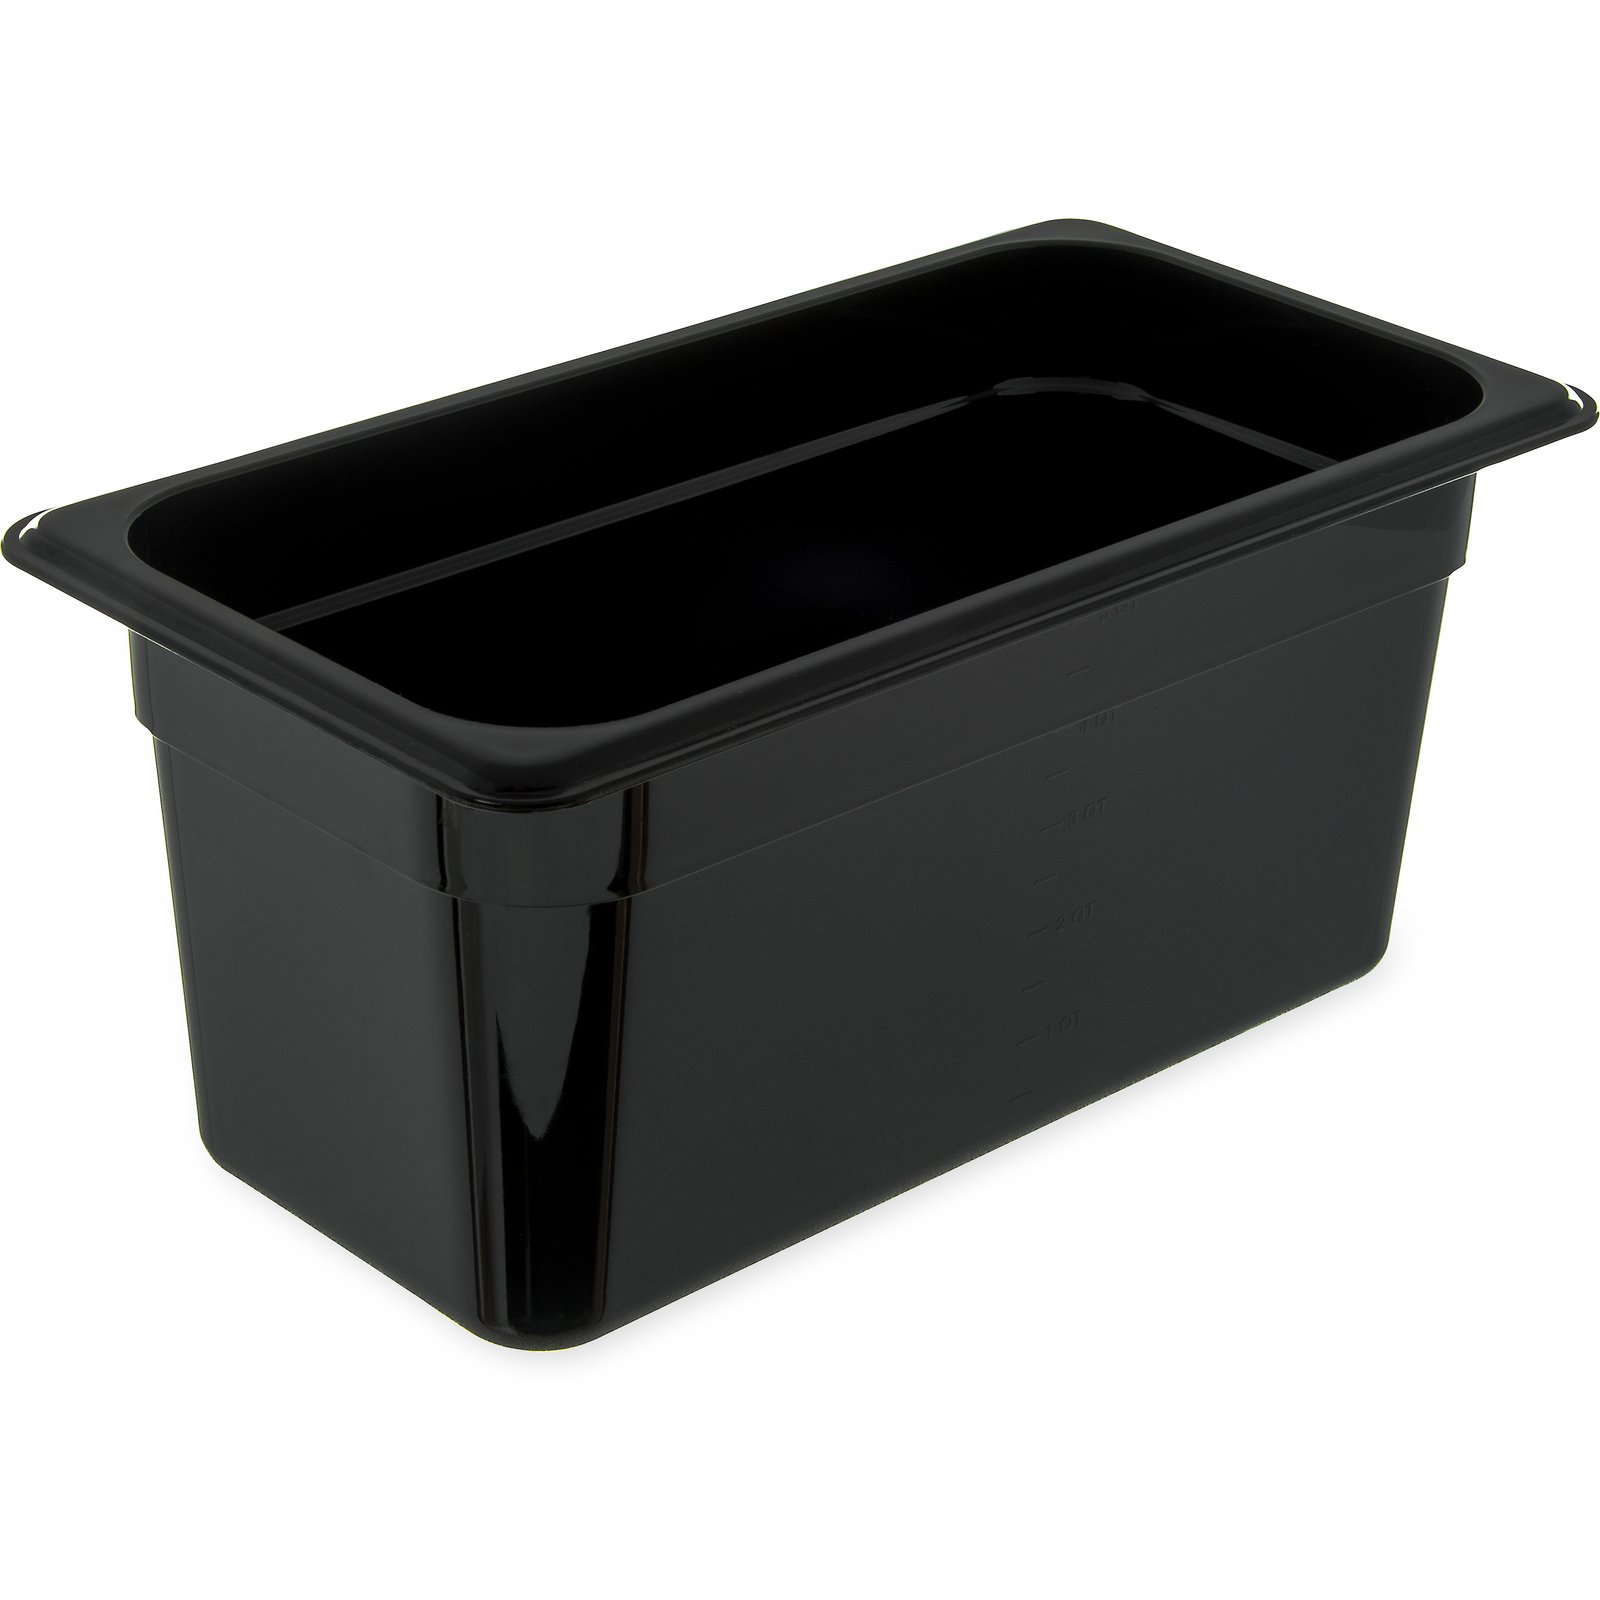 1/3 Size, True Food Storage Pan(SKU - 810323)